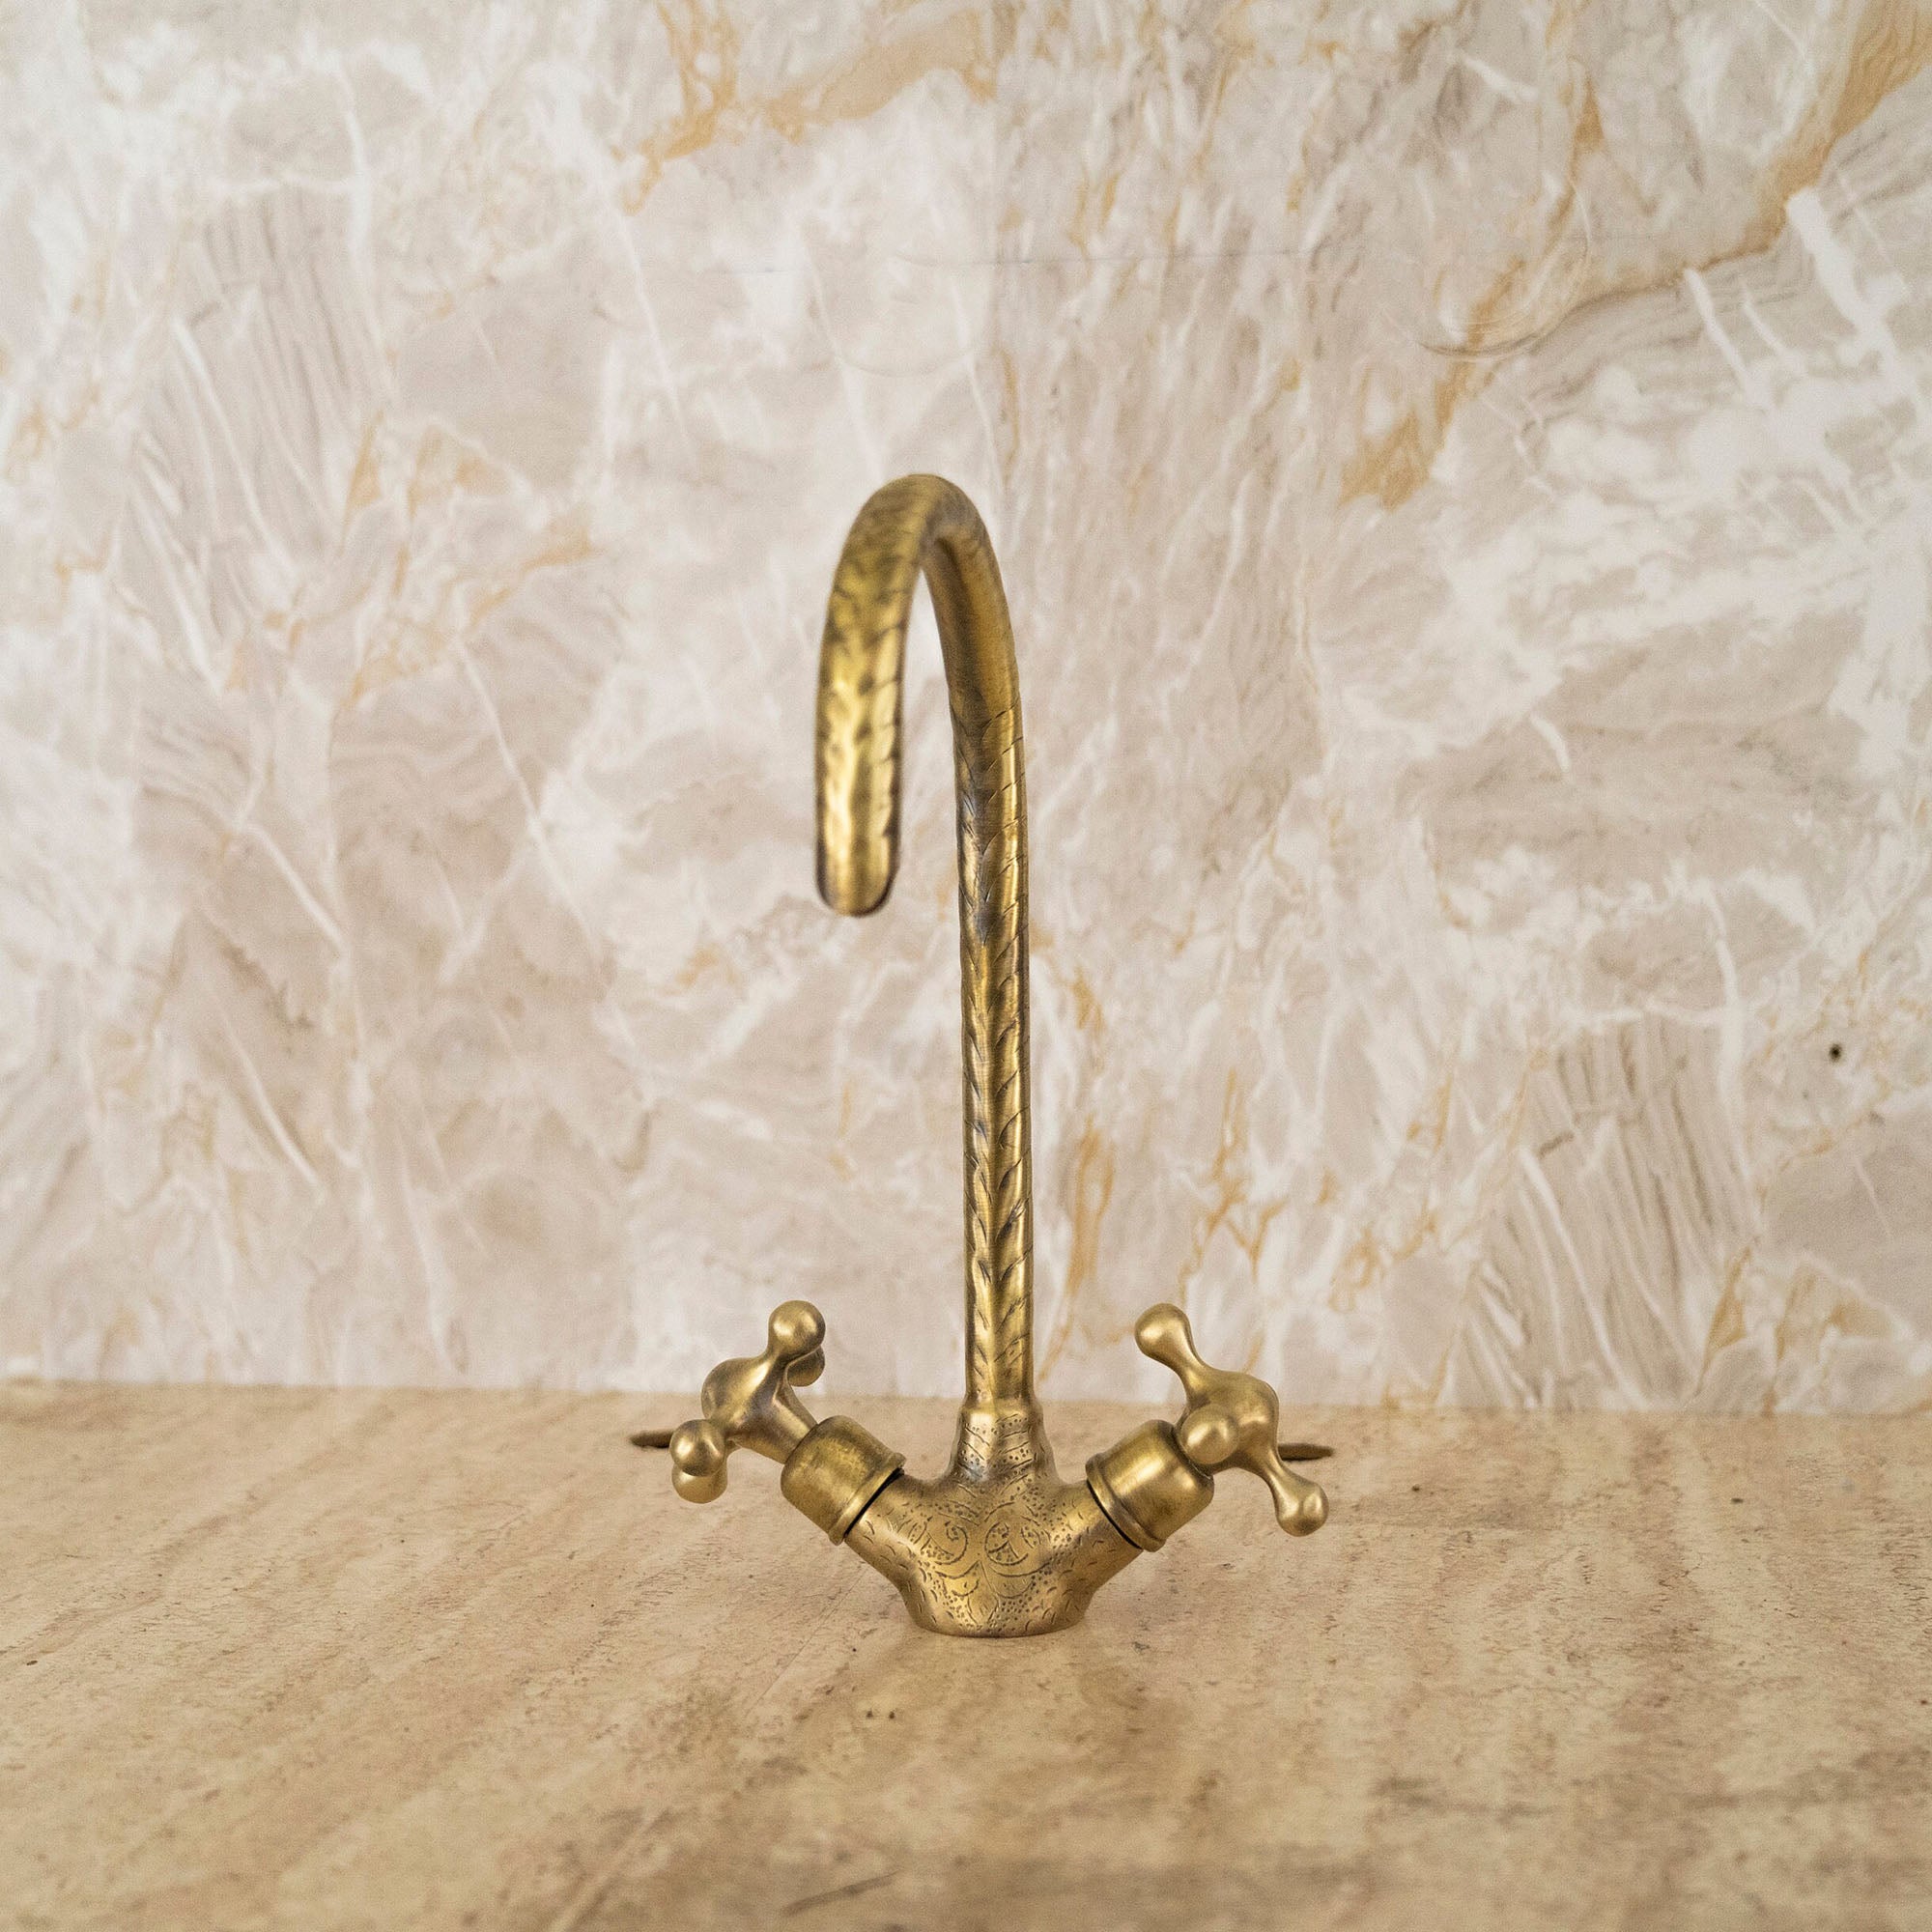 Solid brass Gooseneck faucet, Unlacquered Brass Bathroom Faucet